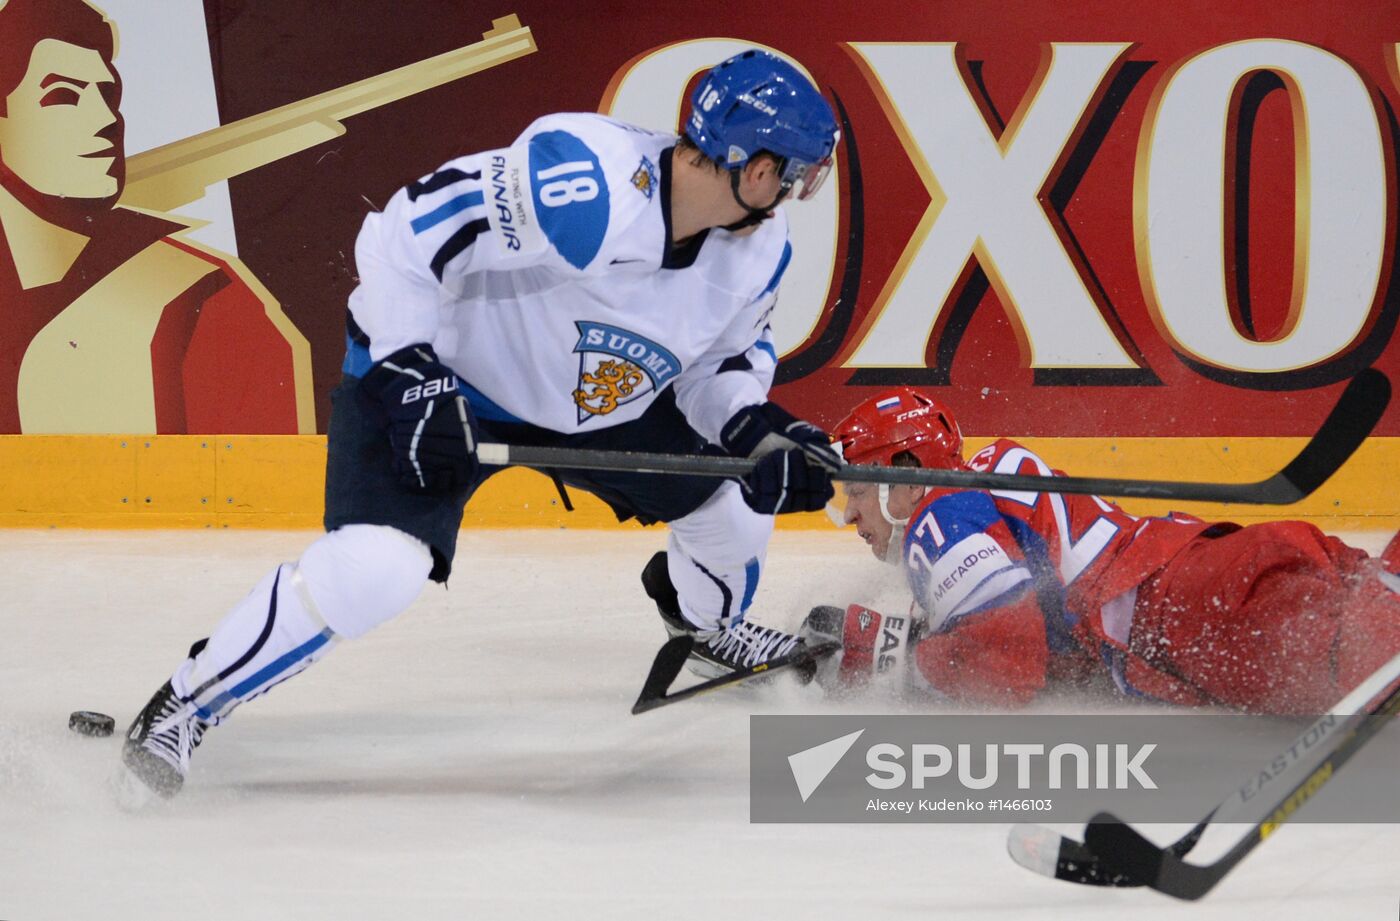 2013 Men's World Ice Hockey Championships. Russia vs. Finland